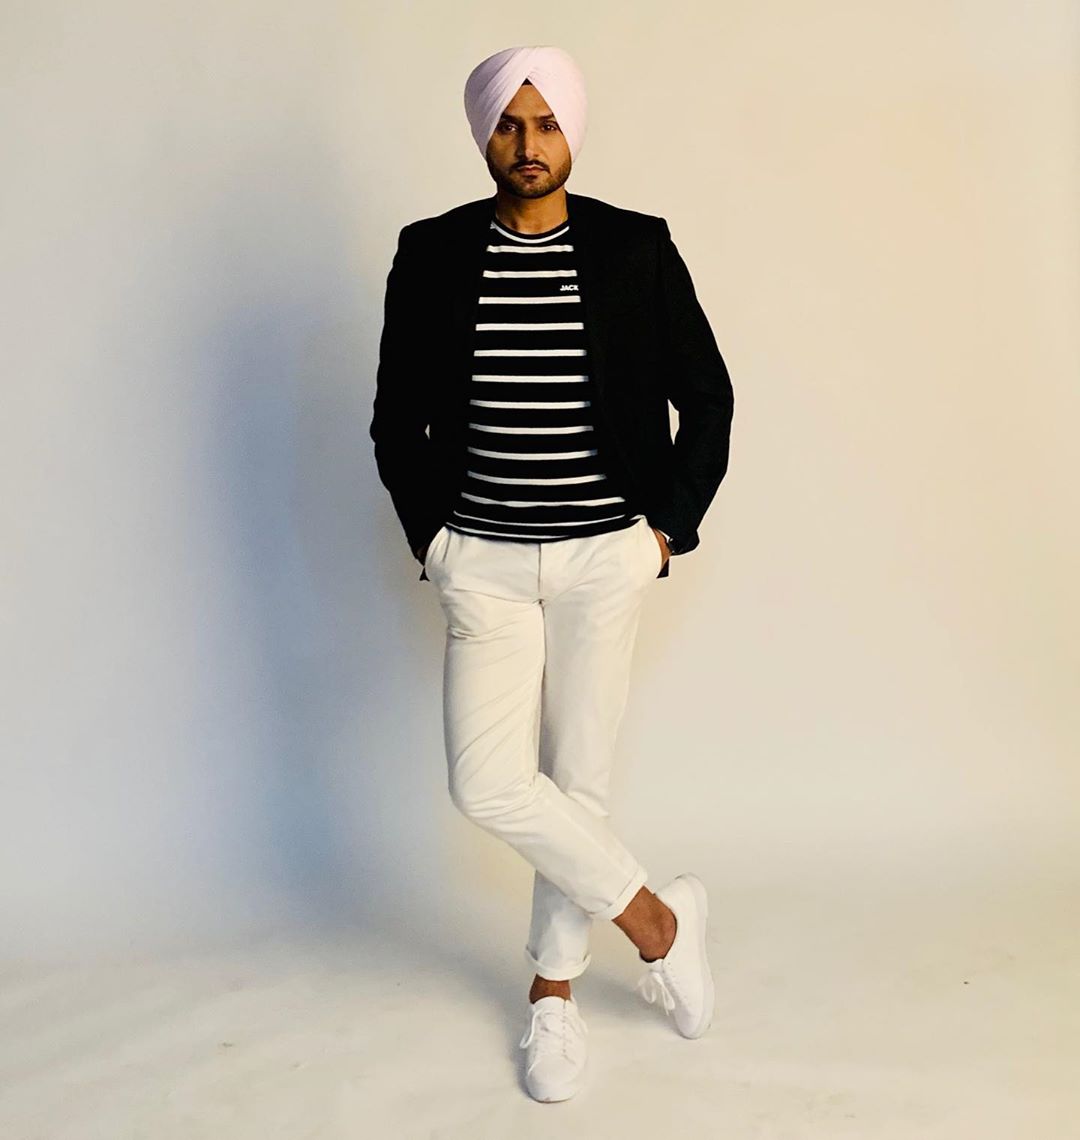 Zee Punjabi is all set to bring ‘Entertainment Da Tyohar’ starting August 30th